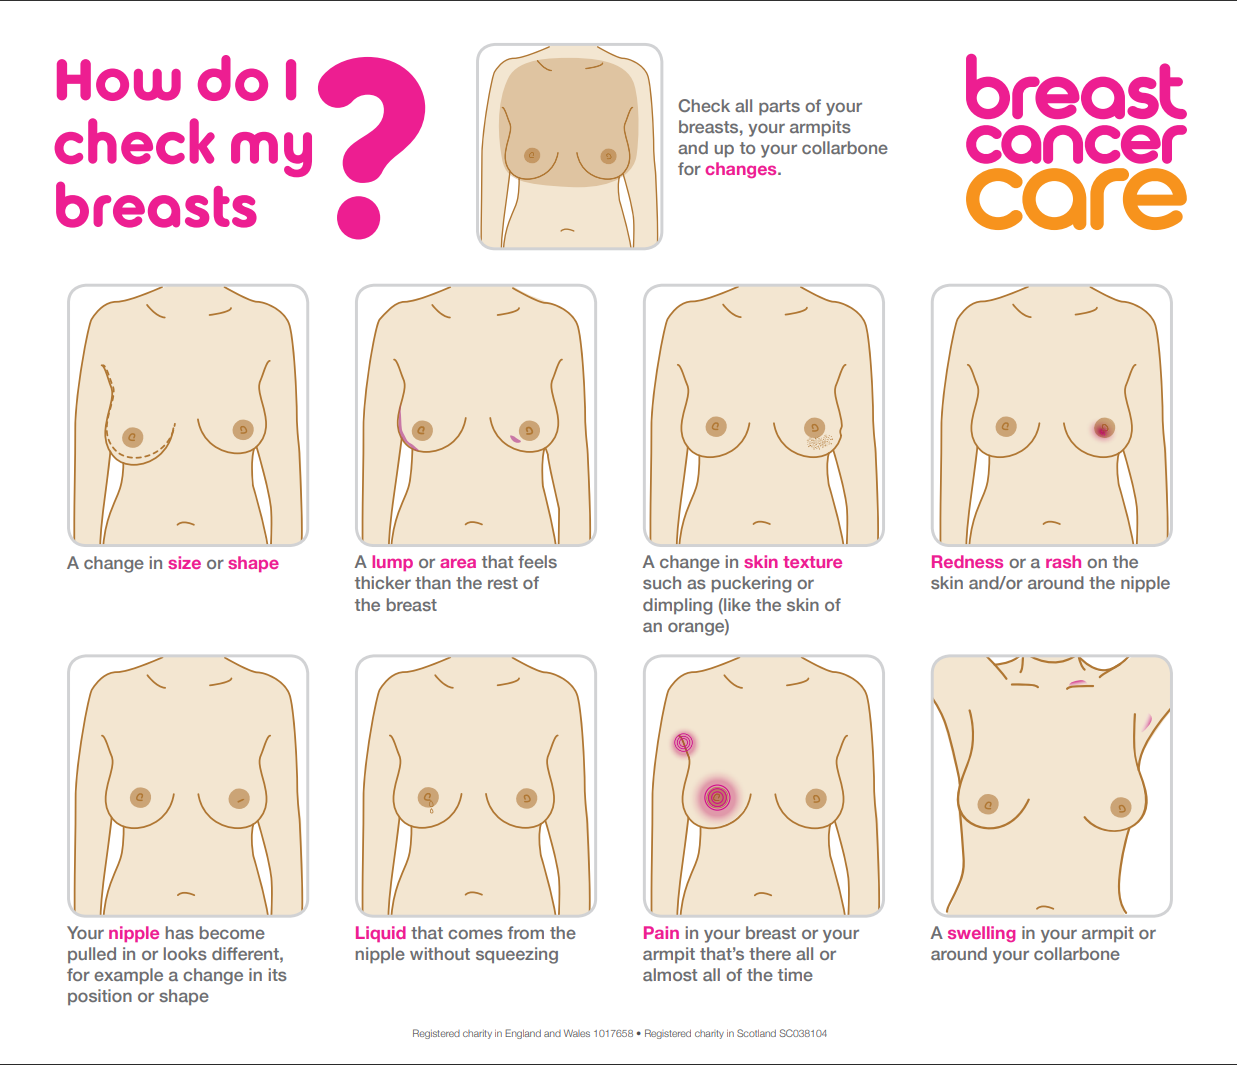 Breastscreening